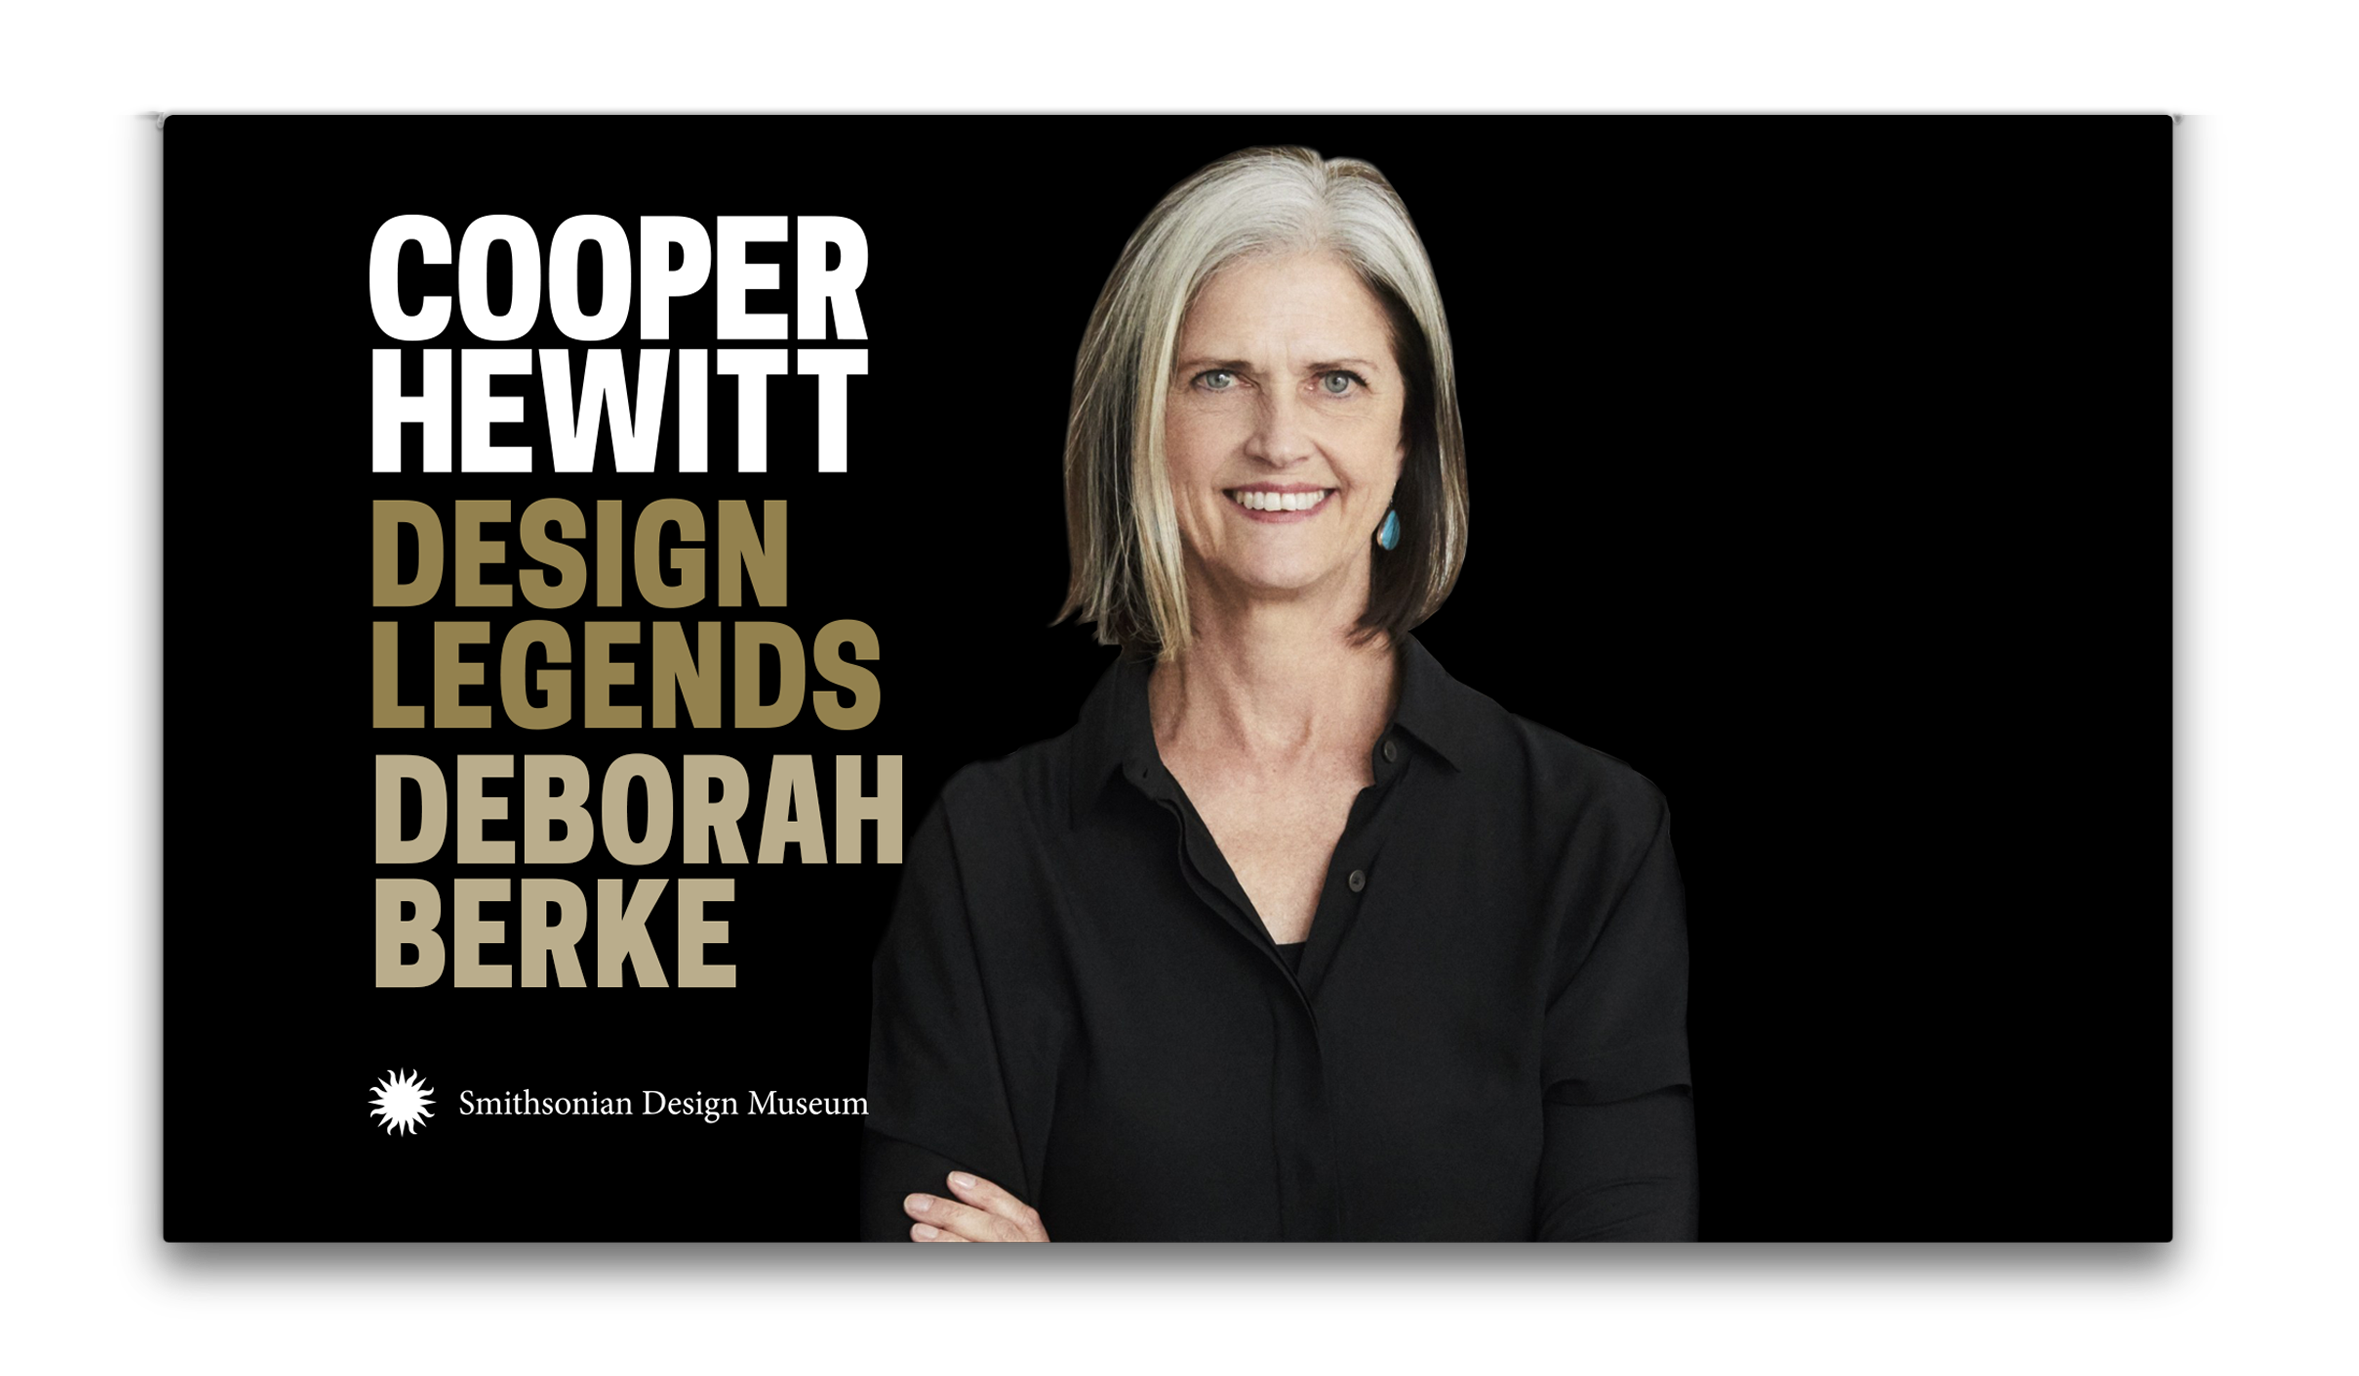 Photograph of 2017 National Design Award winner Deborah Berke with text that says "Cooper Hewitt Design Legends Deborah Berke." Click on the image to watch a video interview with Berke.